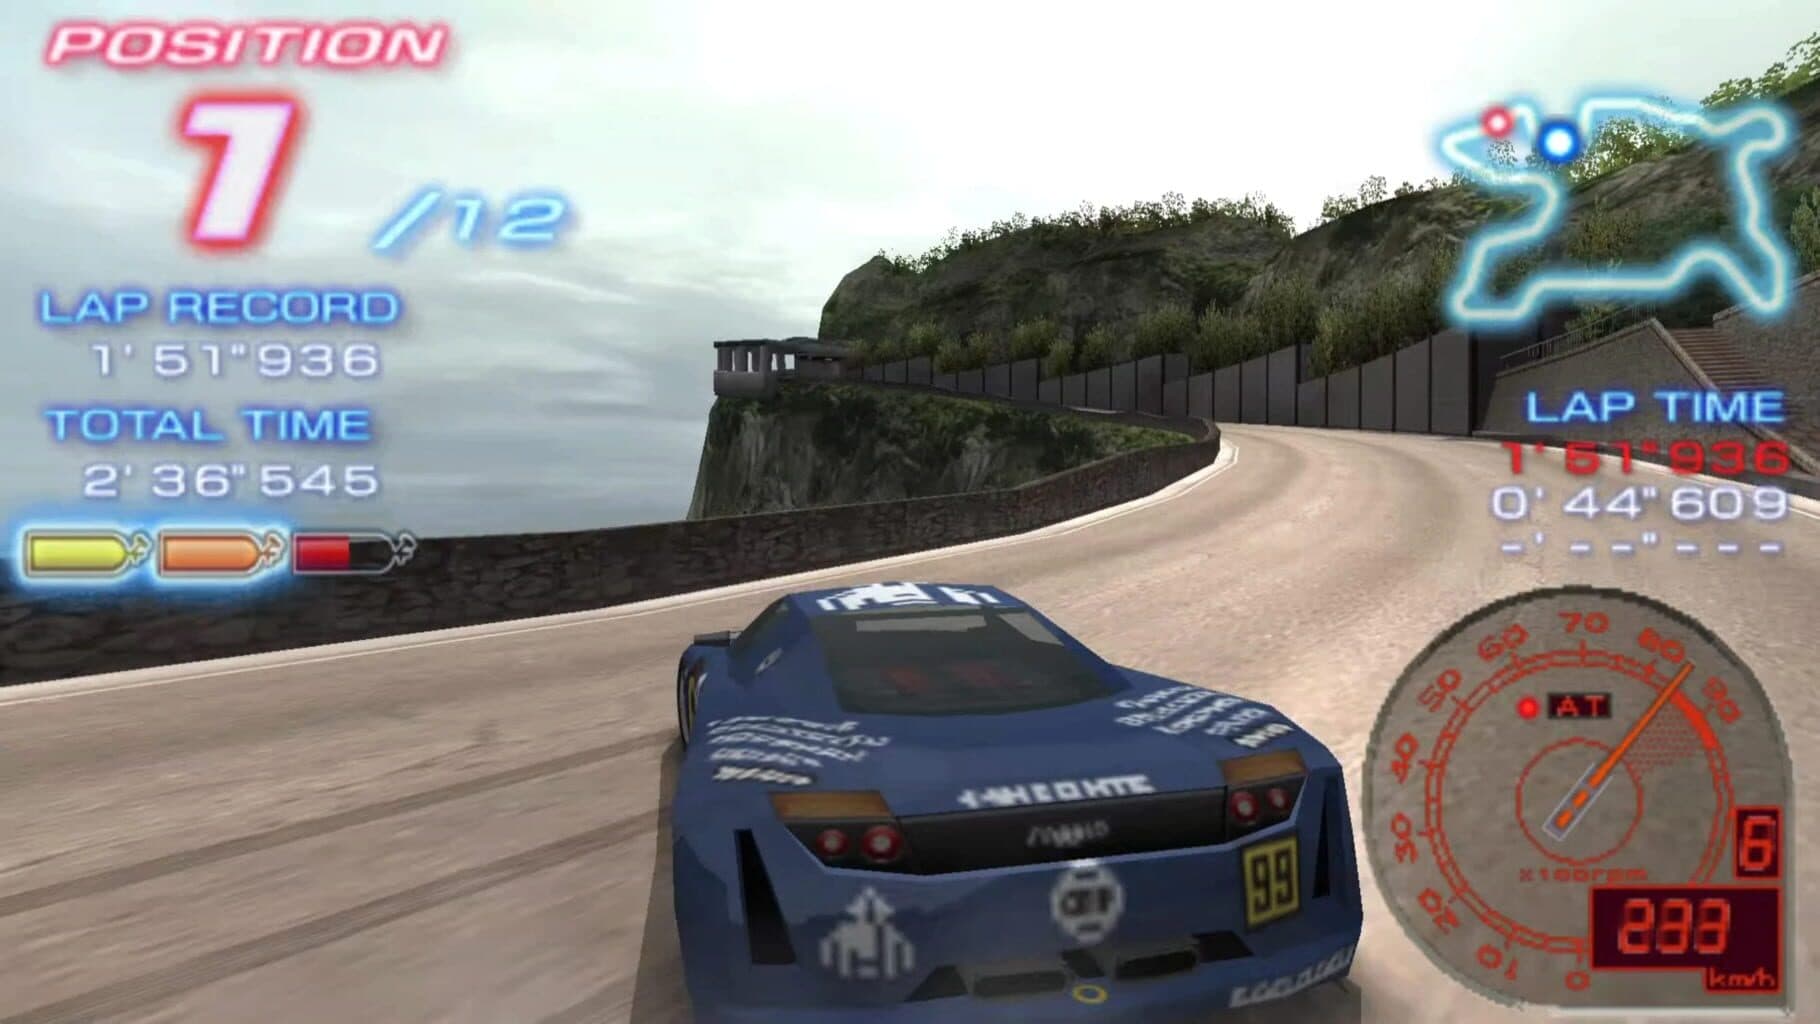 Ridge Racer 2 Image